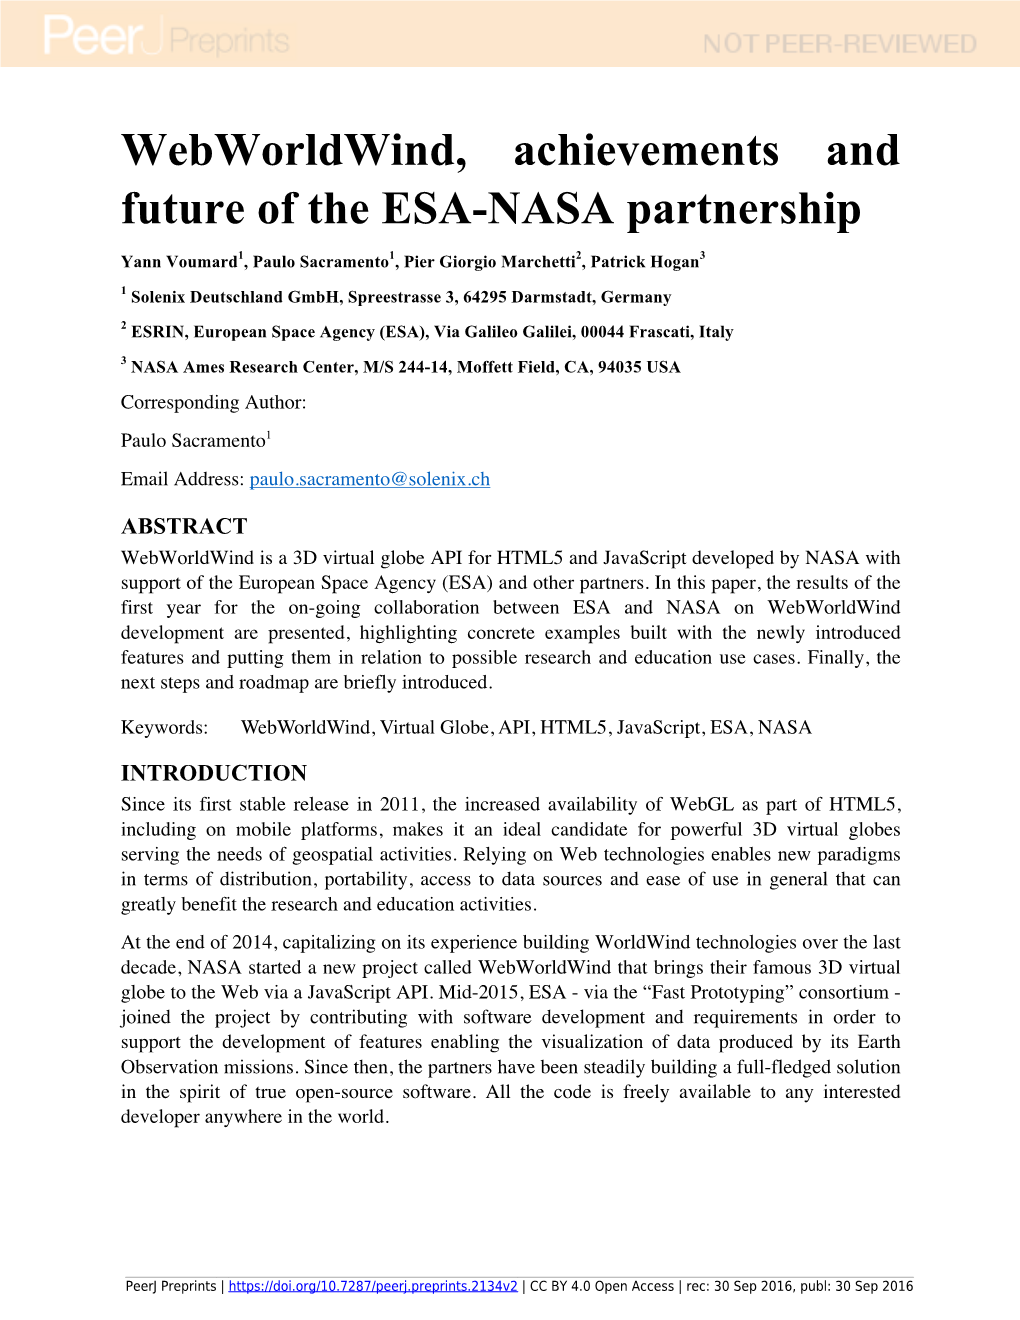 Webworldwind, Achievements and Future of the ESA-NASA Partnership